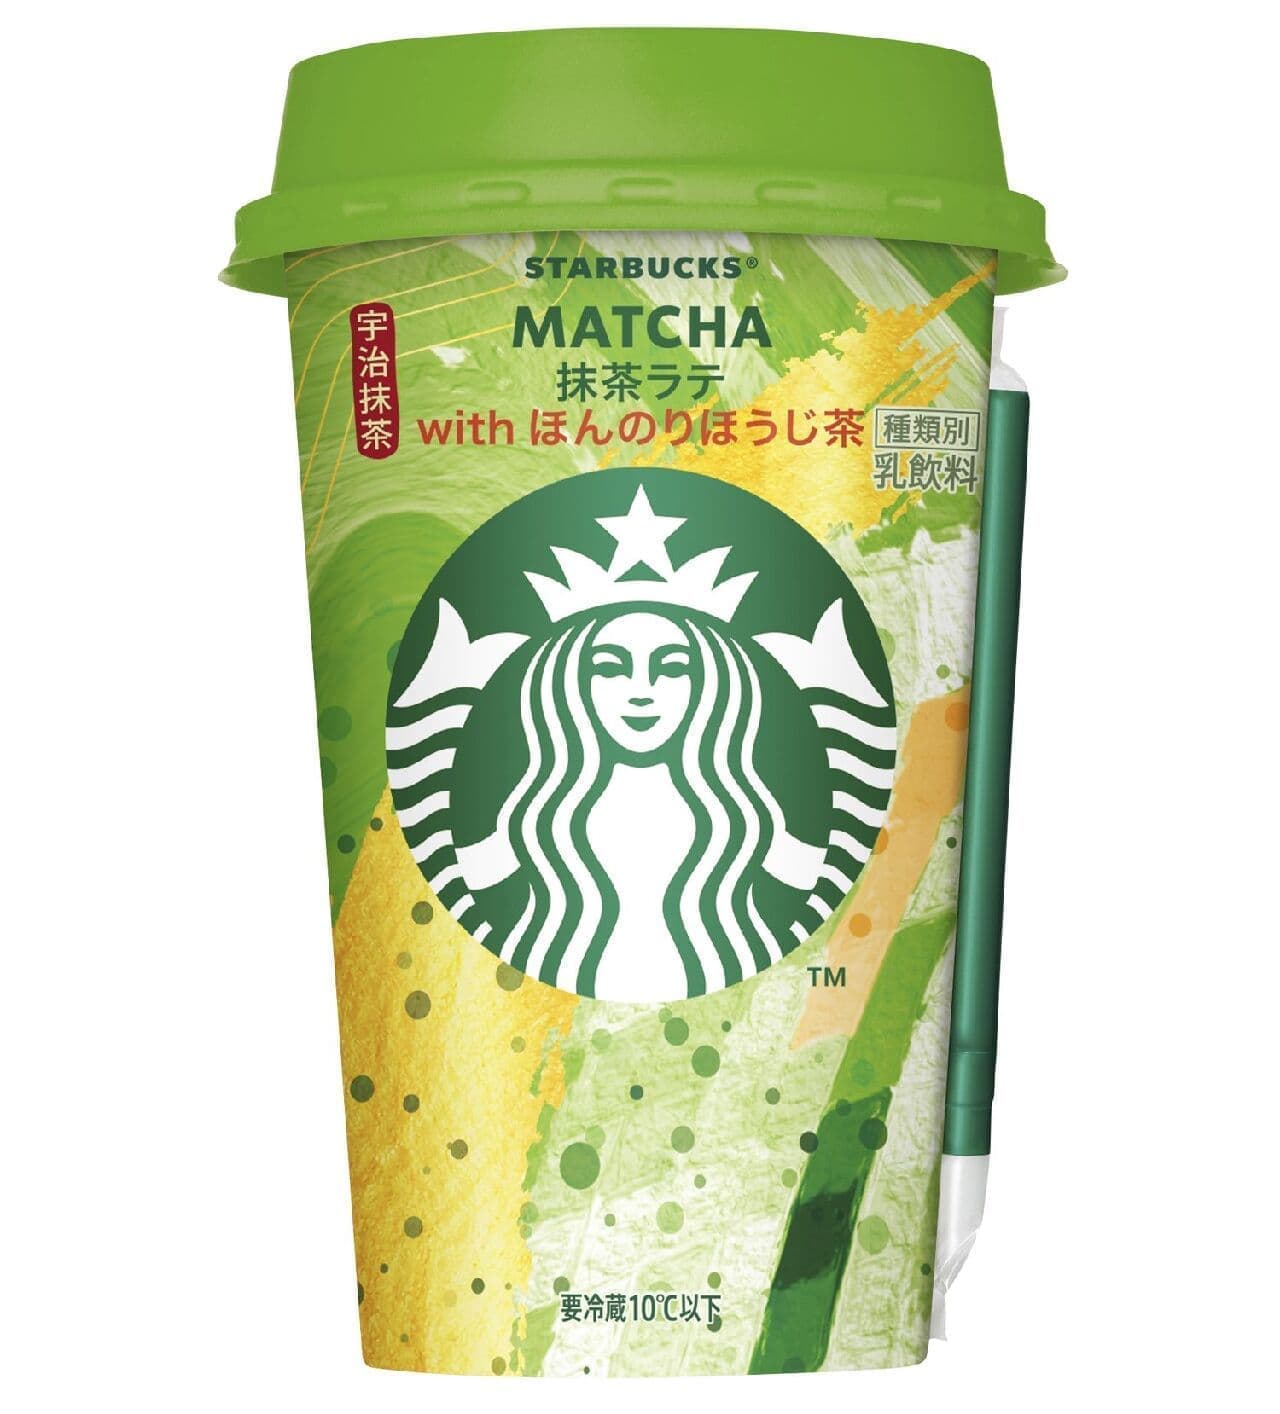 Starbucks Chilled Cup "Starbucks Green Tea Latte with Slightly Hojicha".